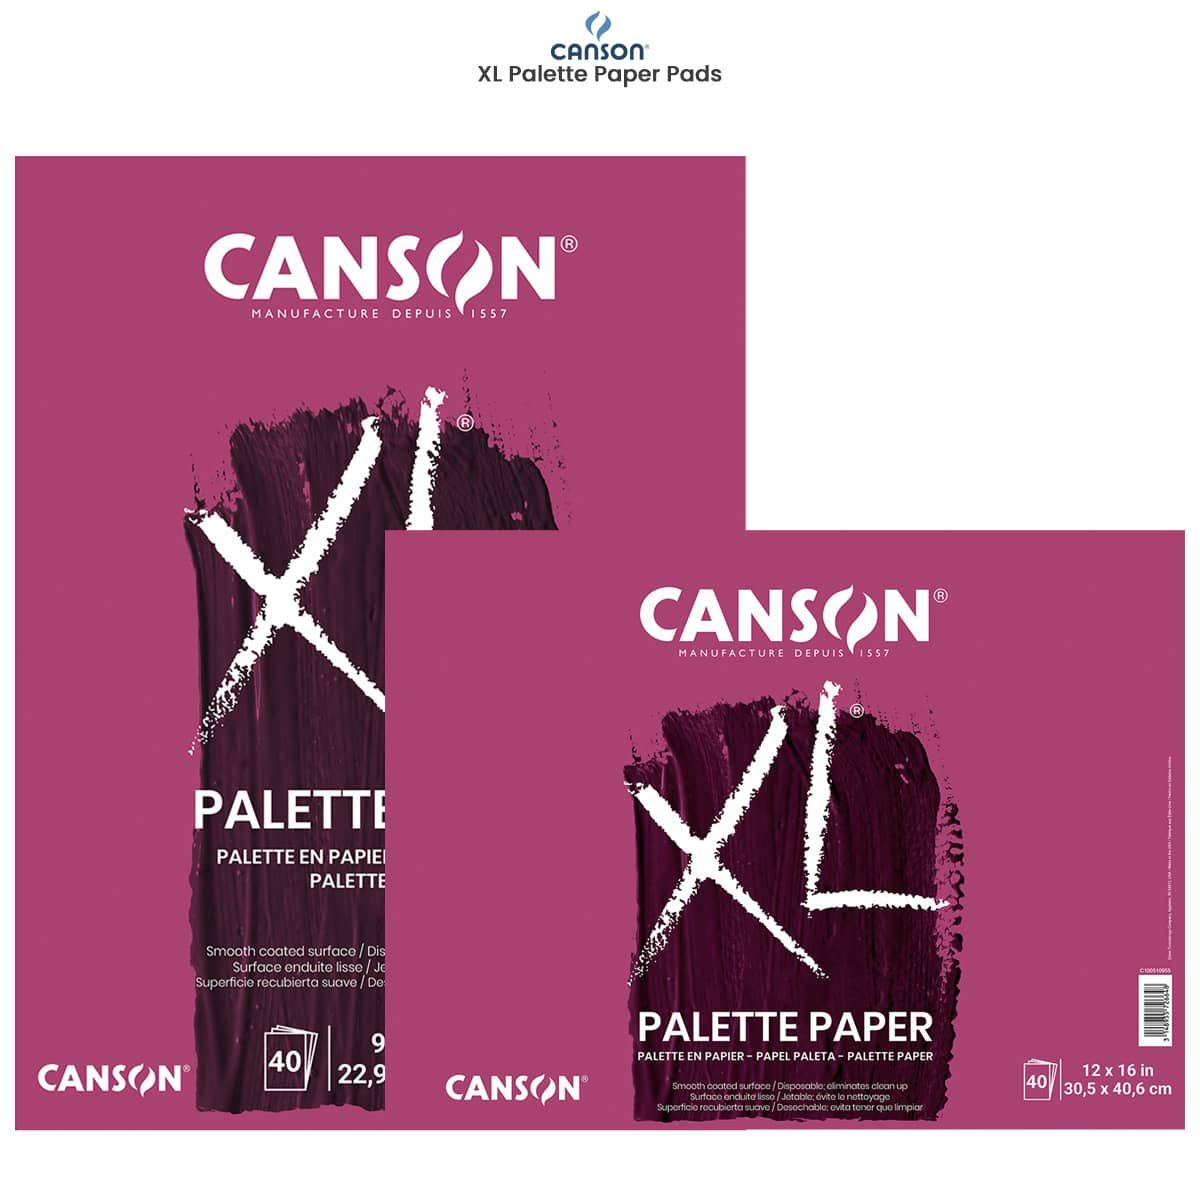 Canson XL Palette Paper Pads